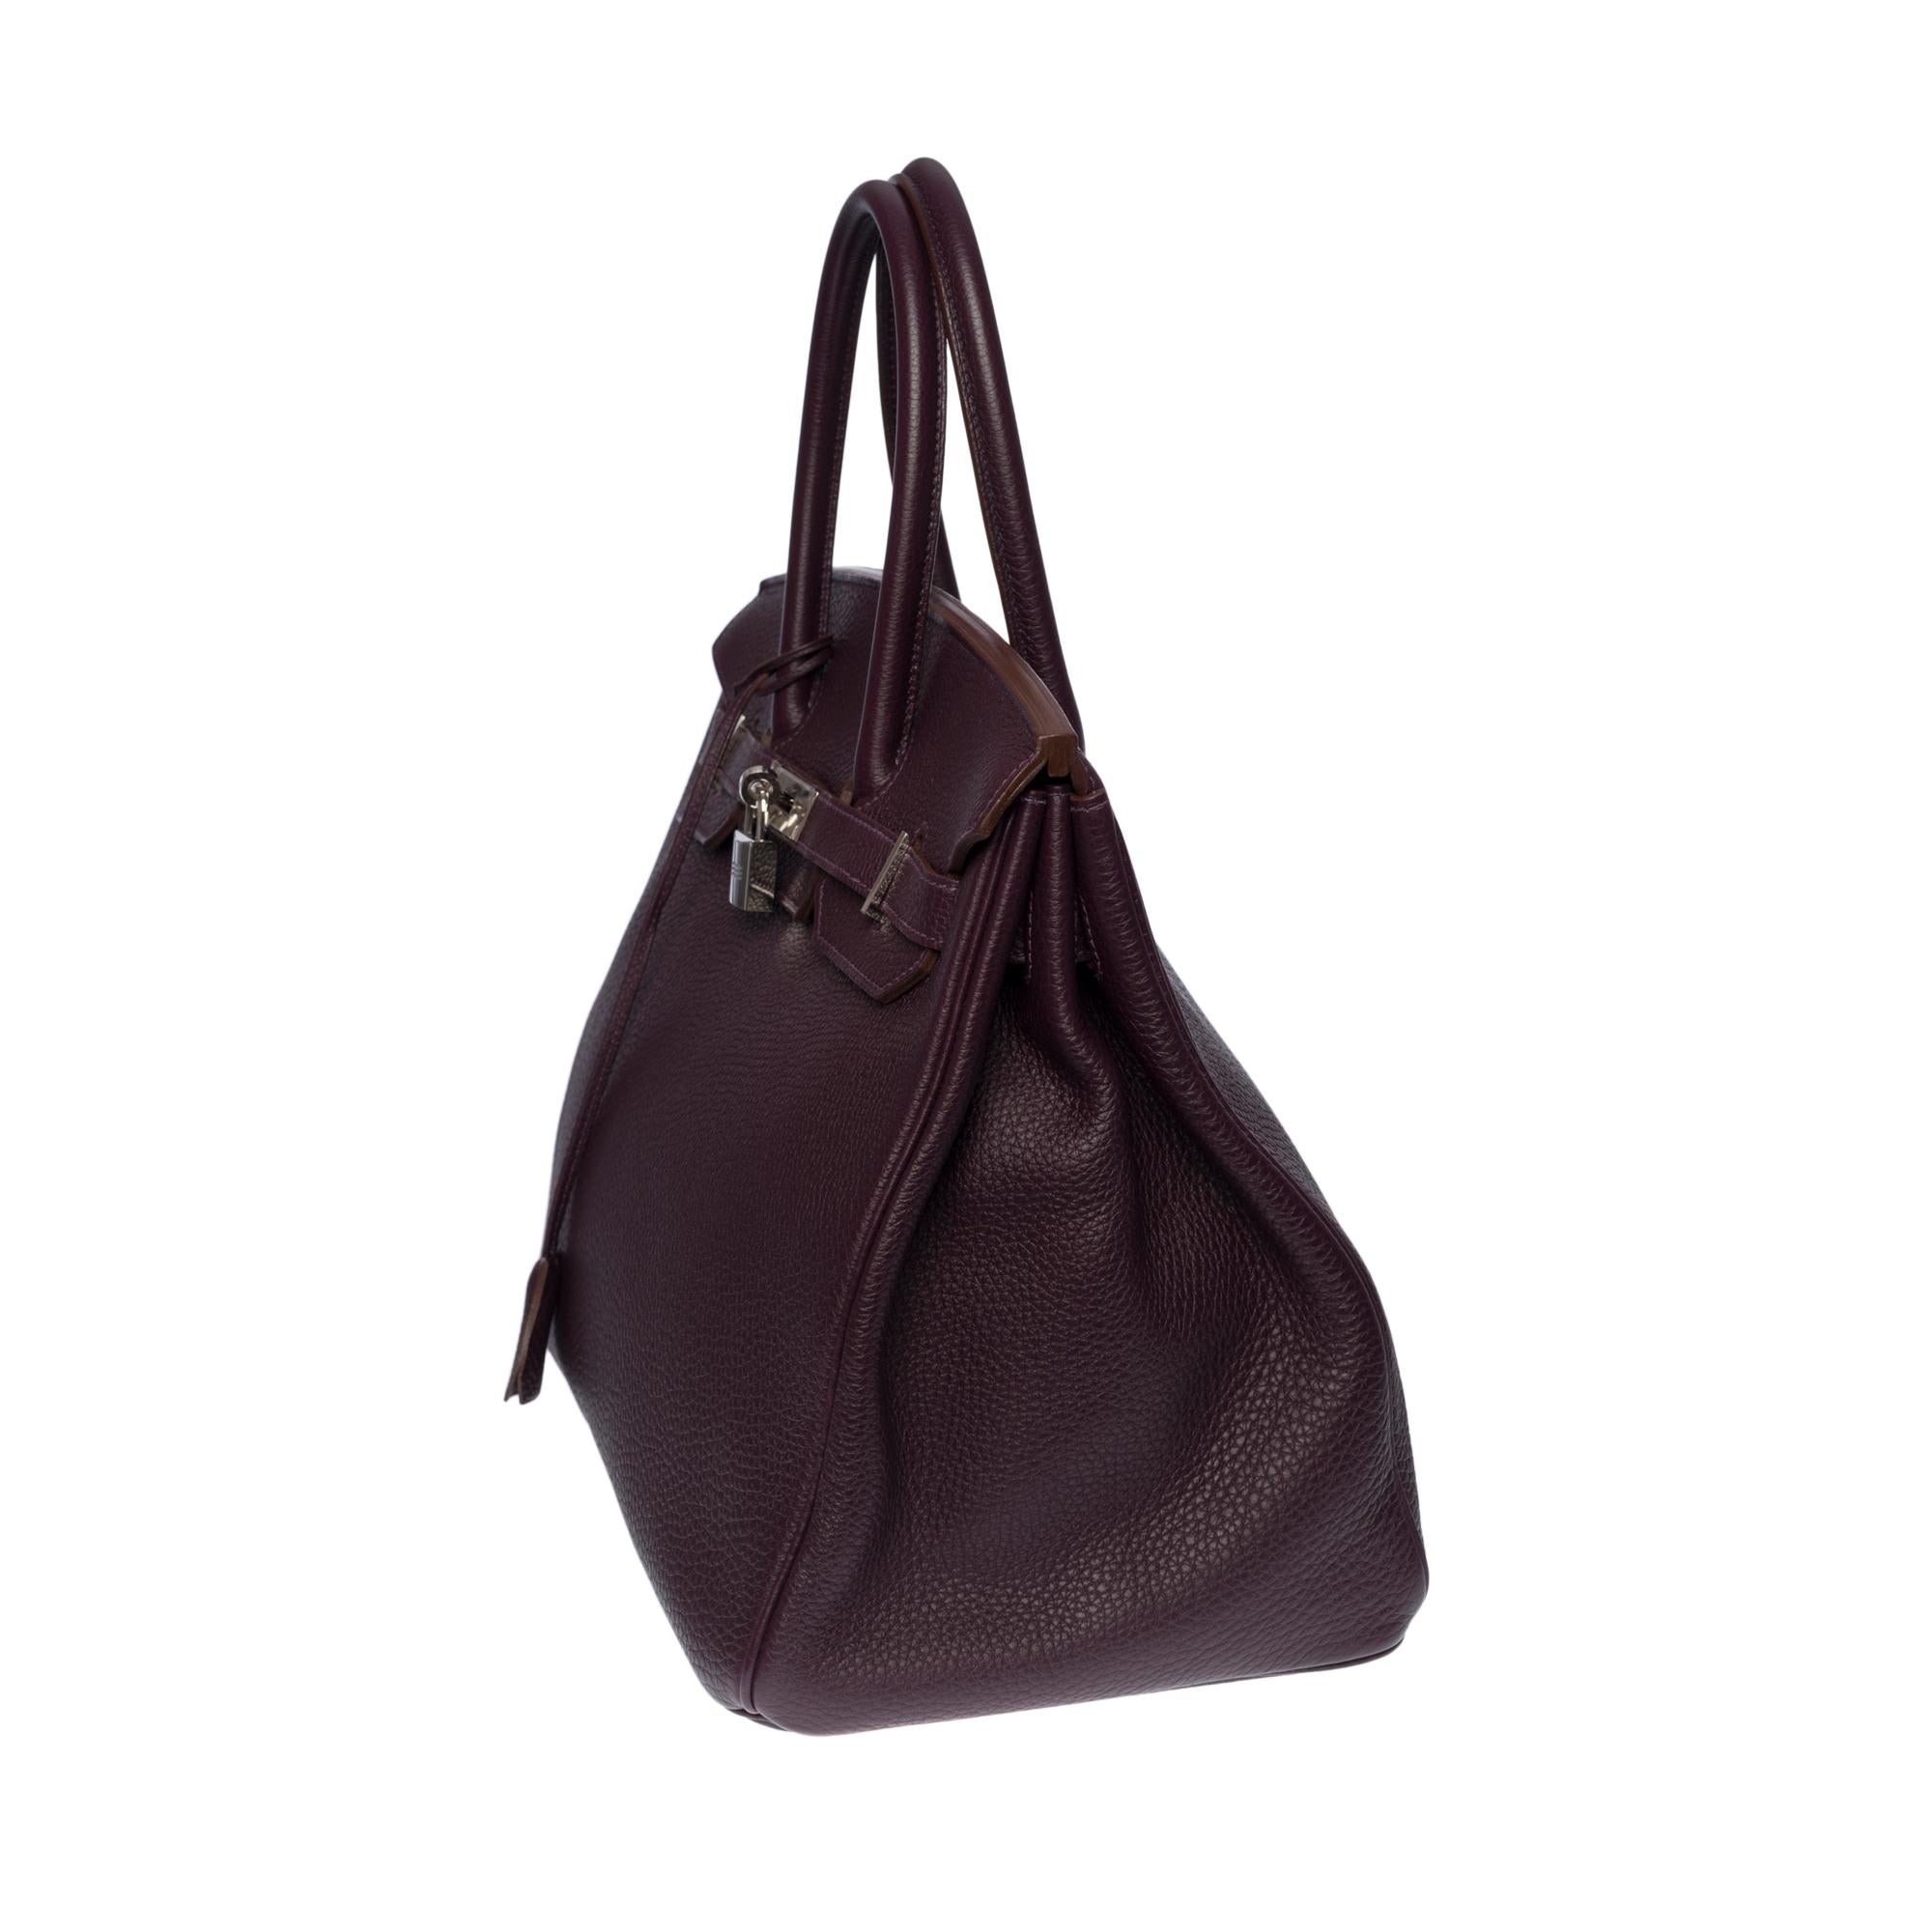 Black Amazing Hermès Birkin 35 handbag in raisin Togo leather, SHW